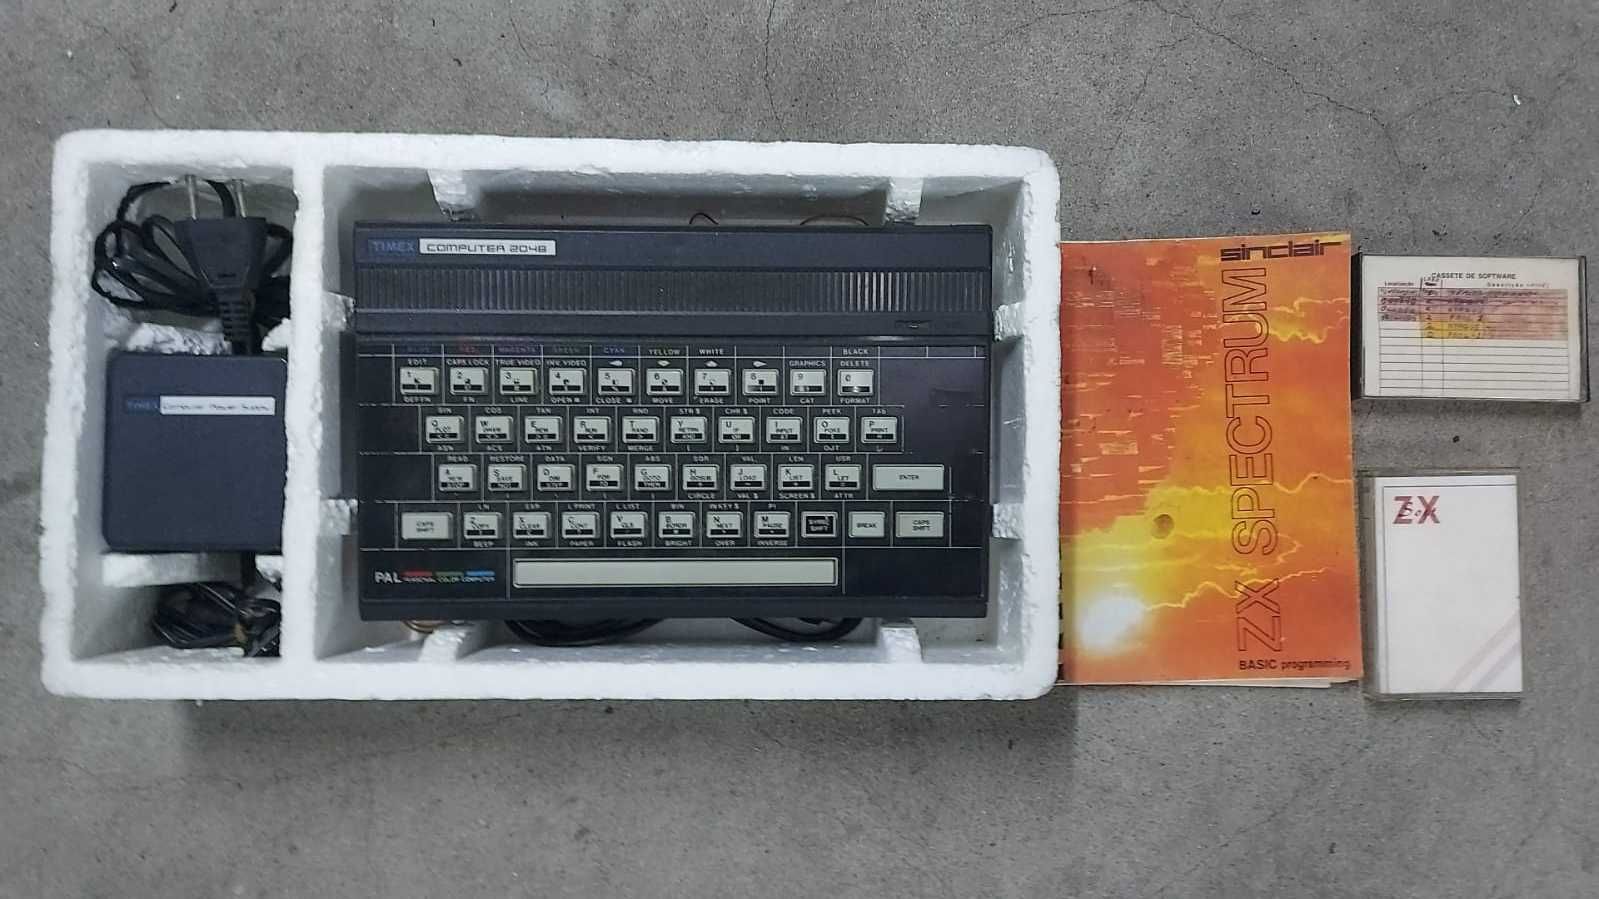 Timex Computer 2048 de 1985